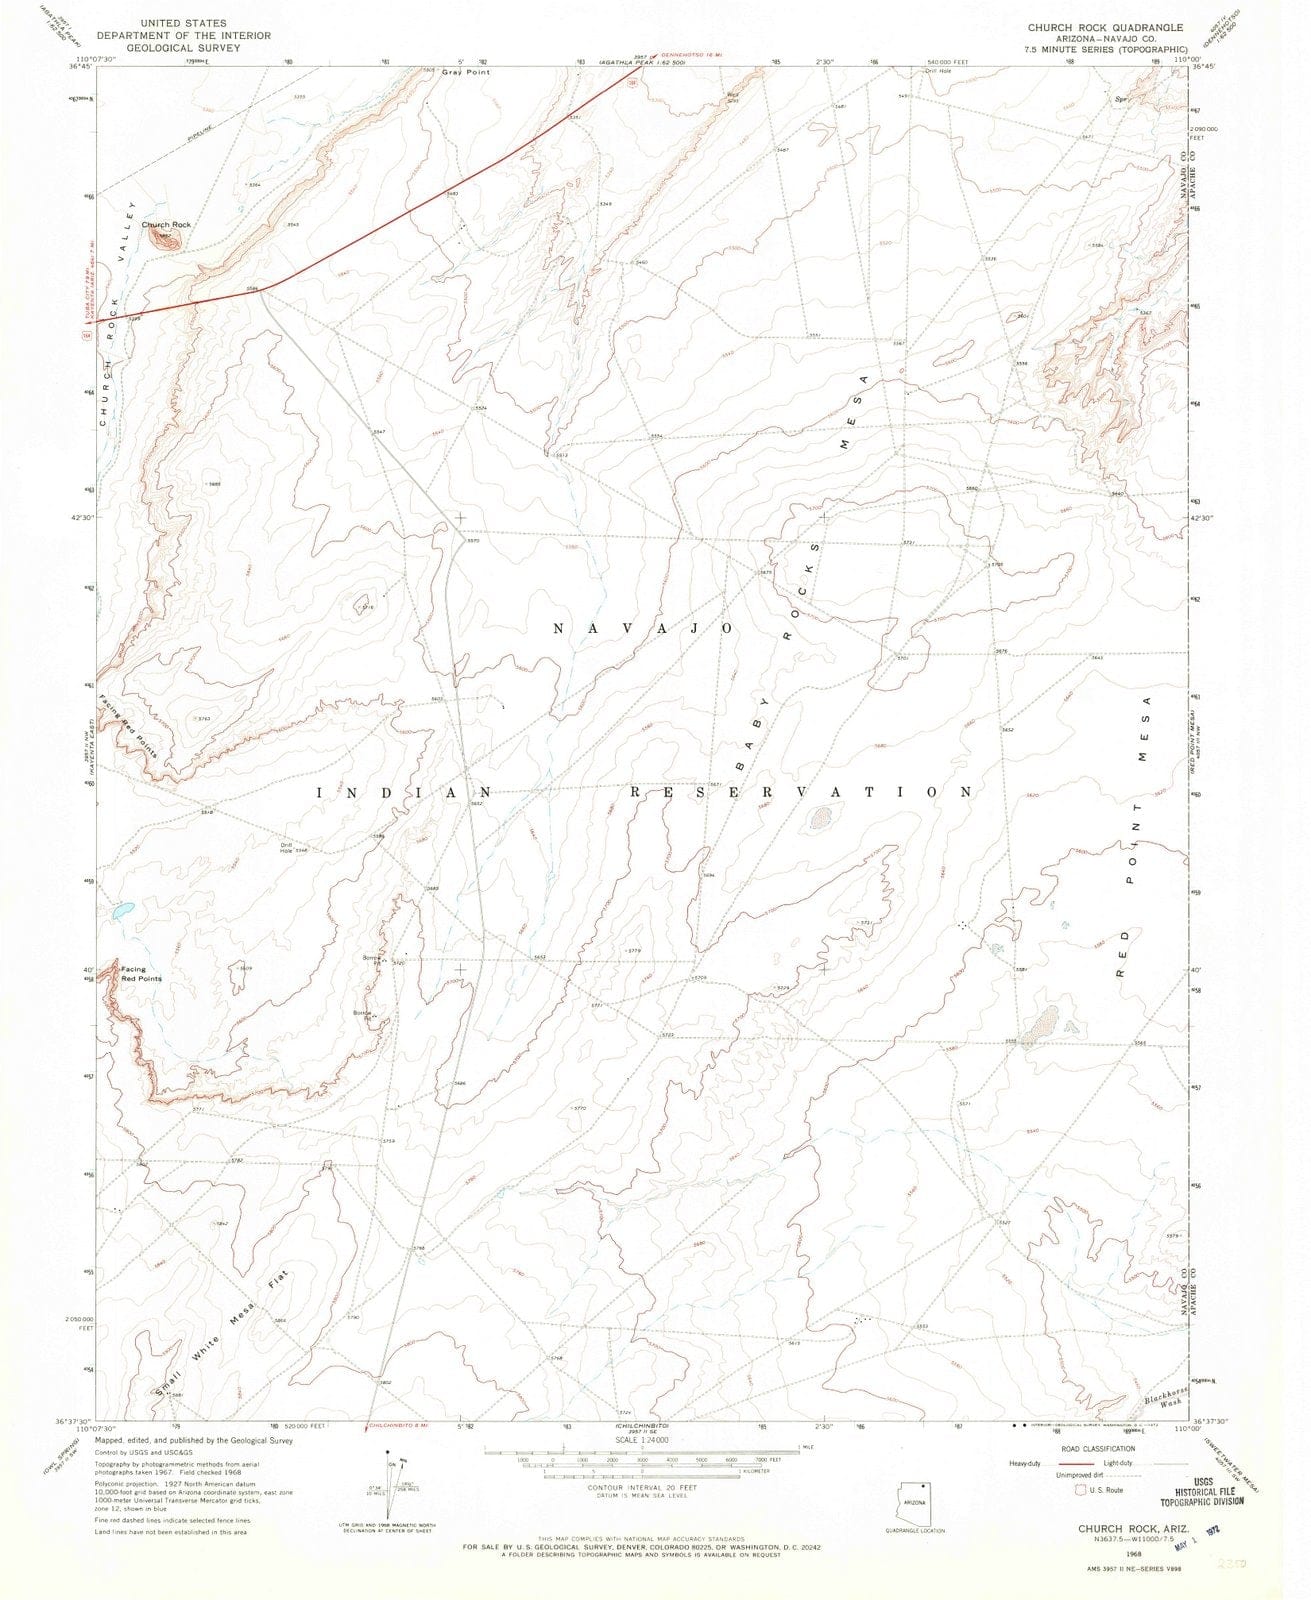 1968 Church Rock, AZ - Arizona - USGS Topographic Map